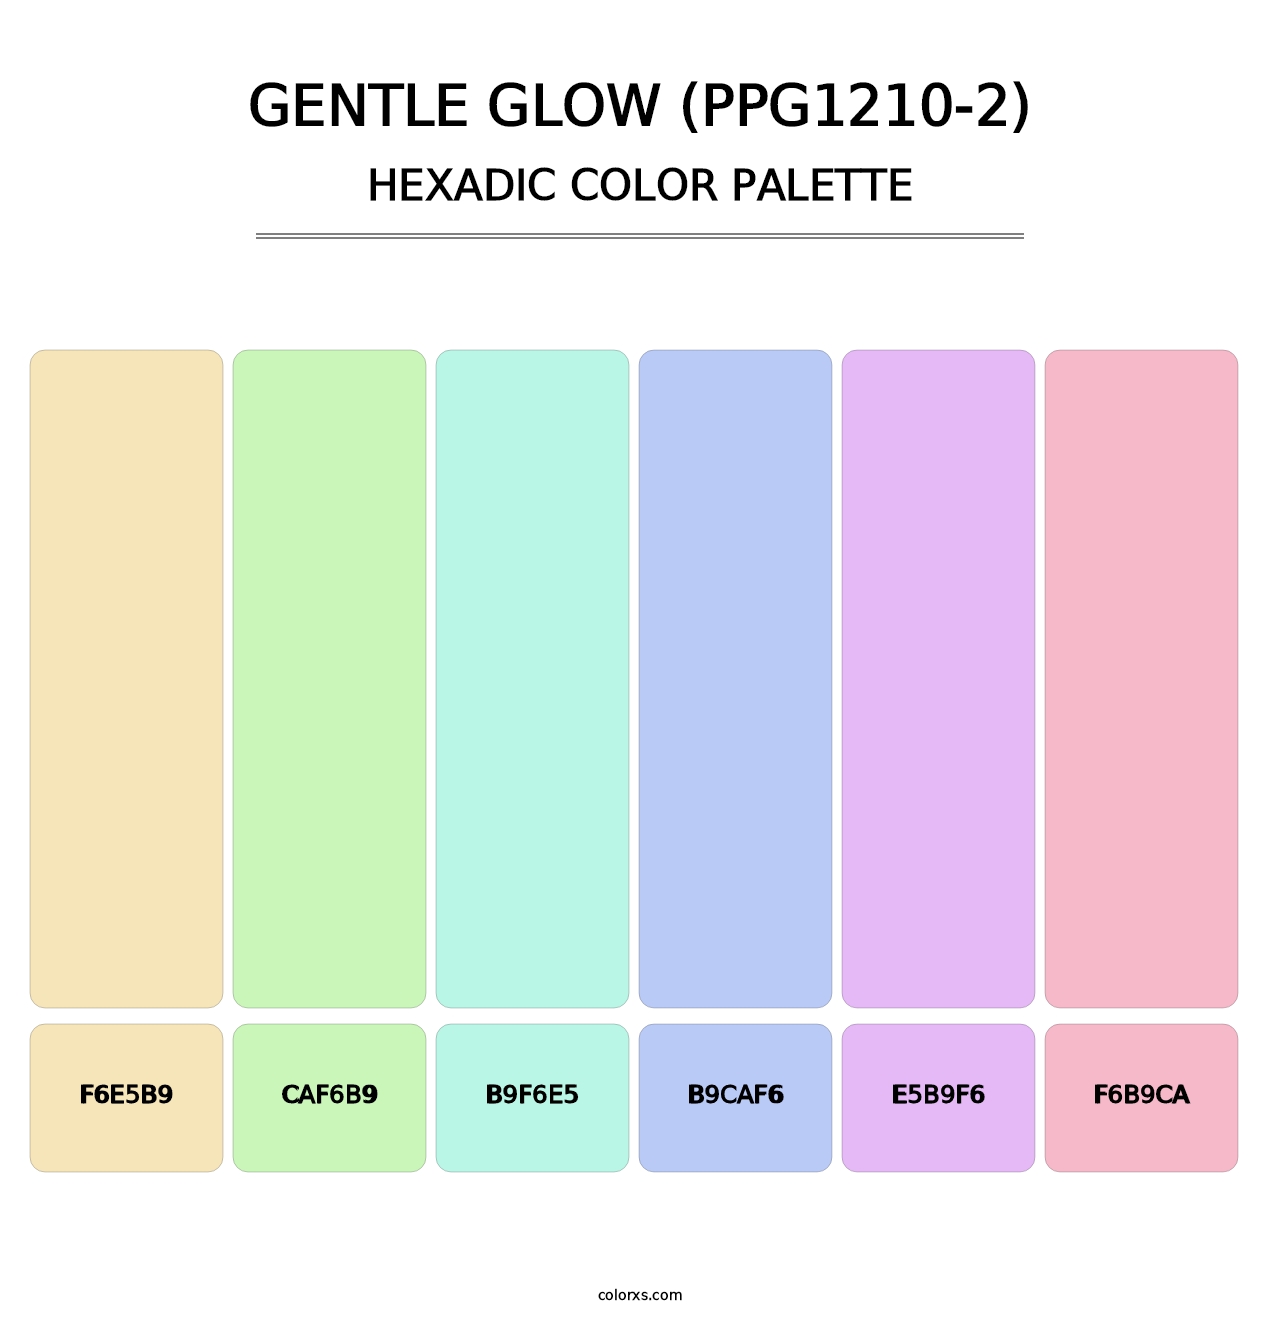 Gentle Glow (PPG1210-2) - Hexadic Color Palette